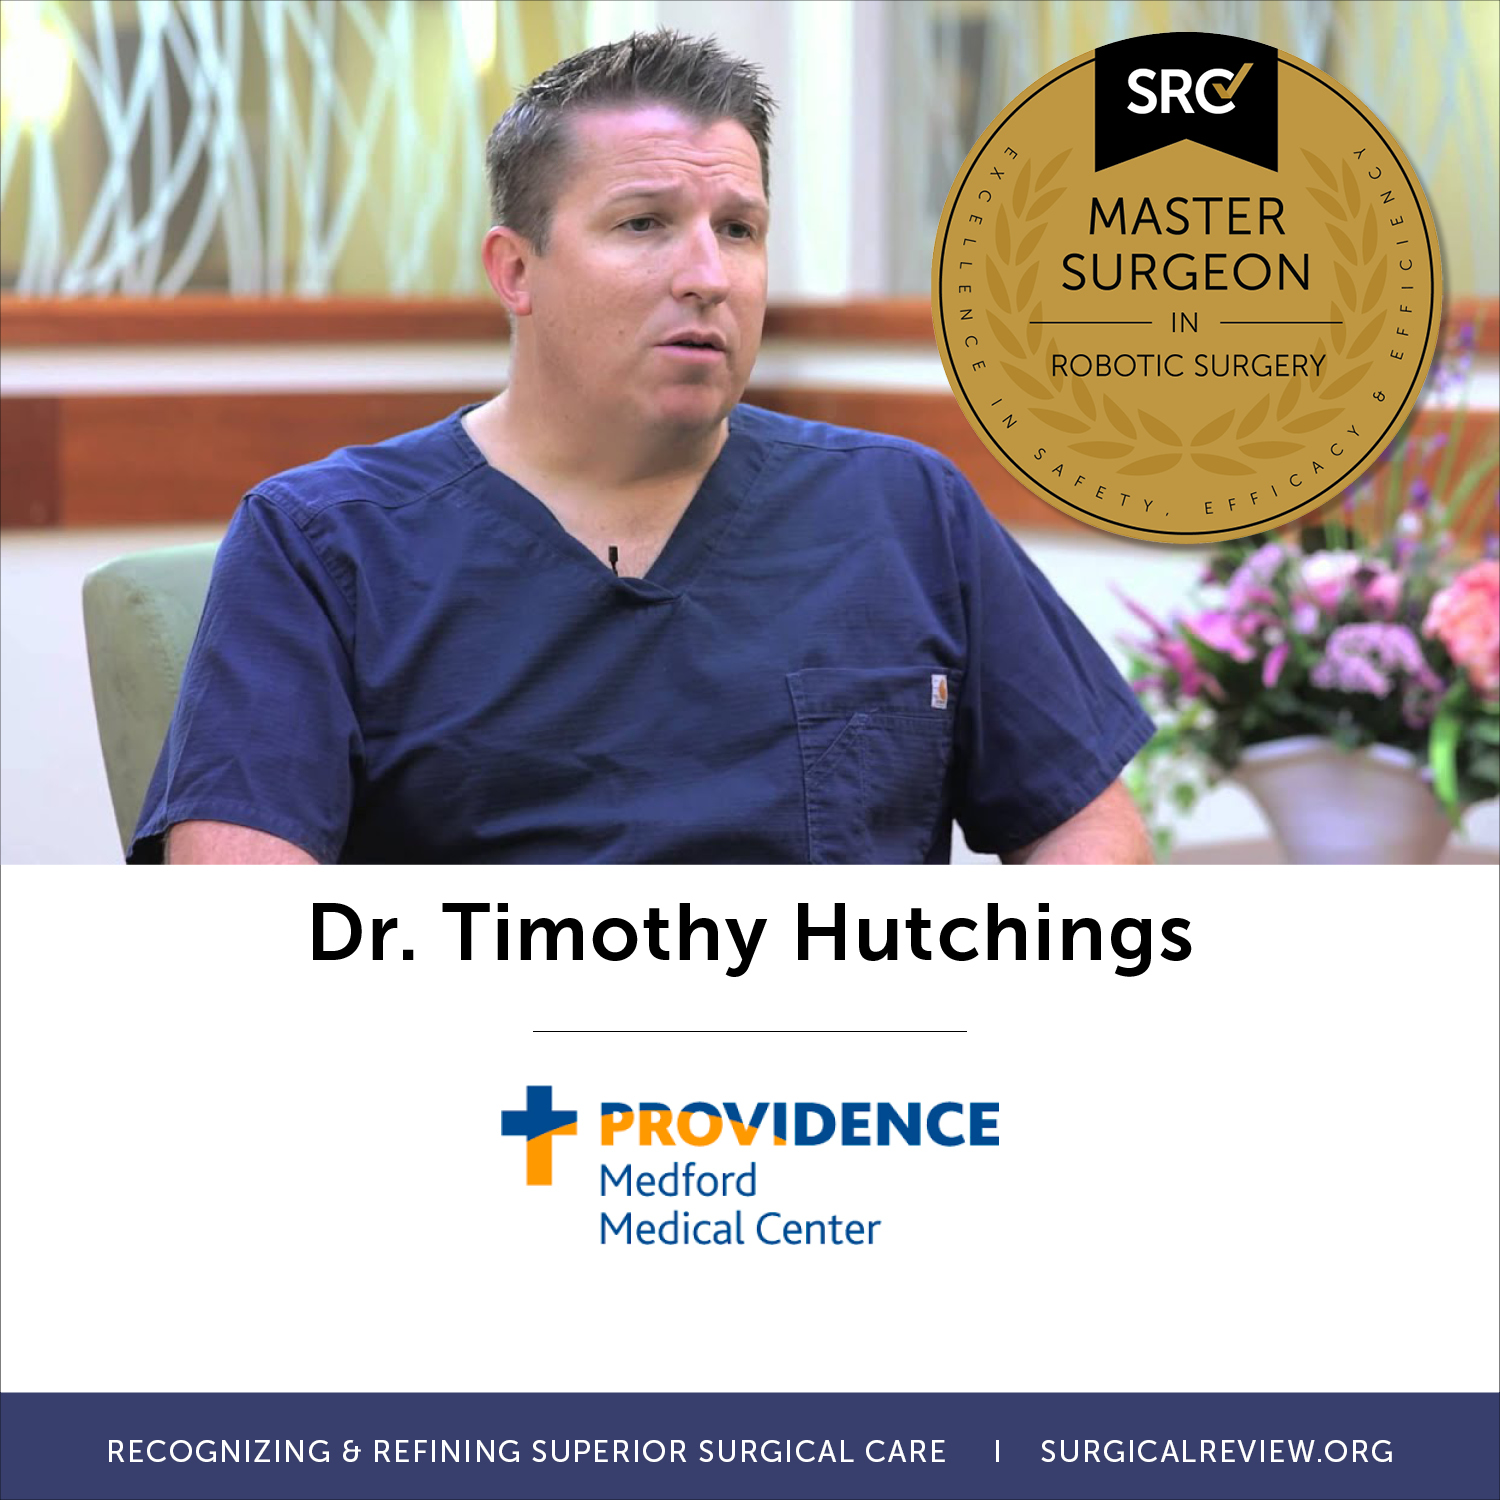 Dr. Timothy Hutchings